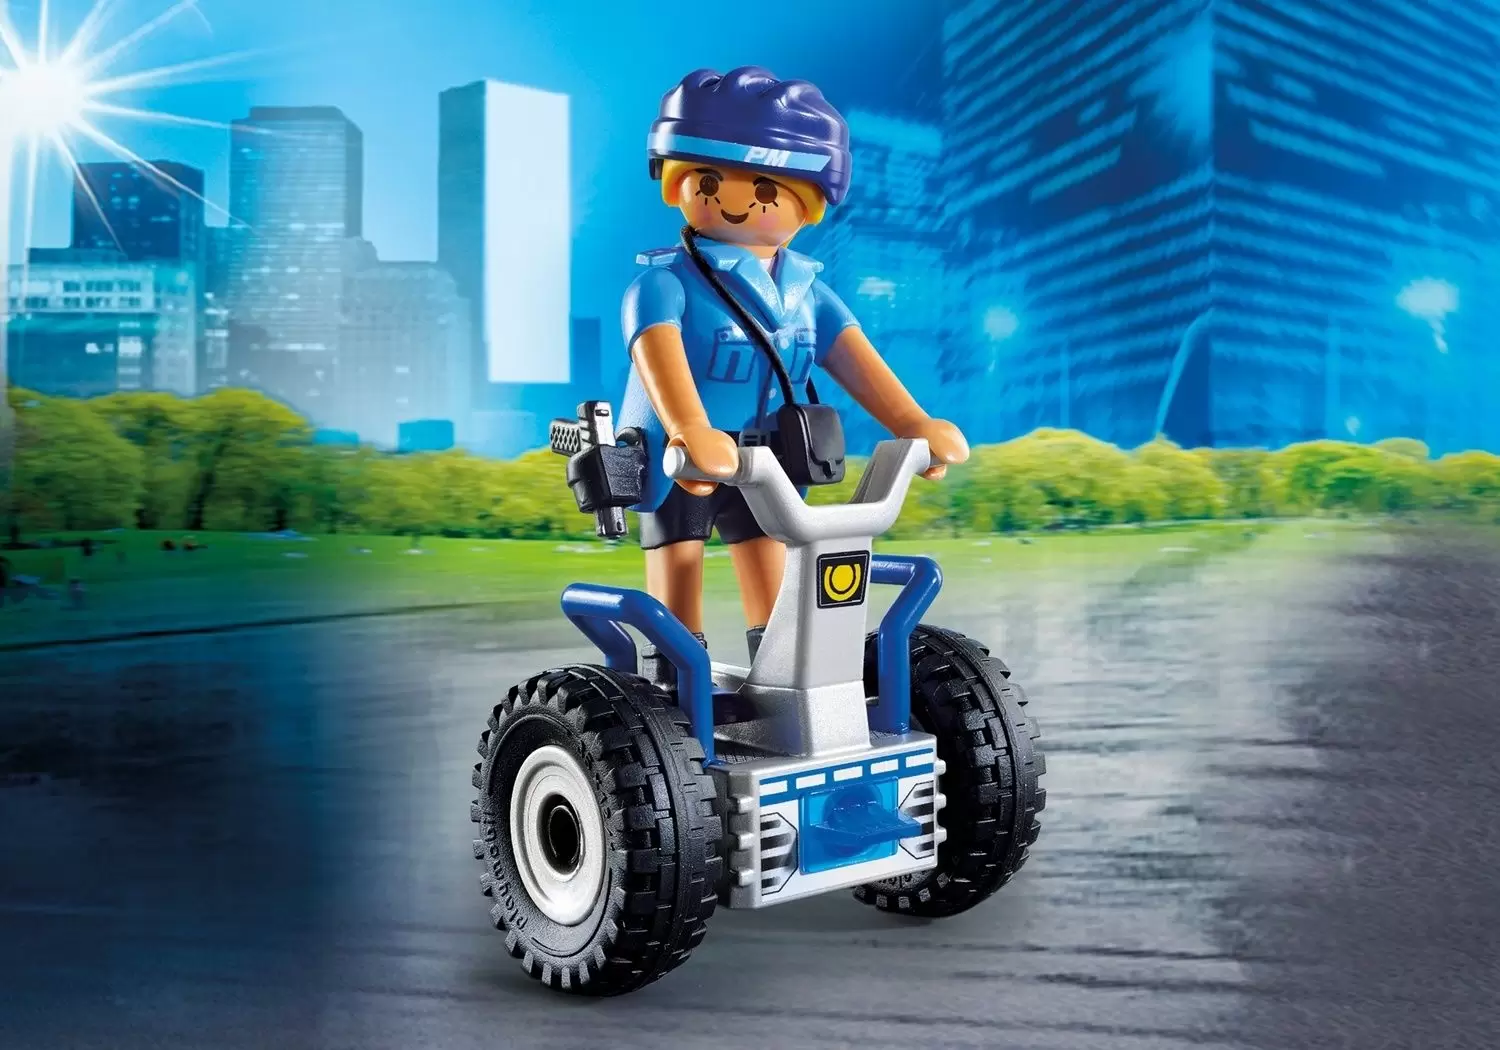 Playmobil Policier - Policière avec gyropode